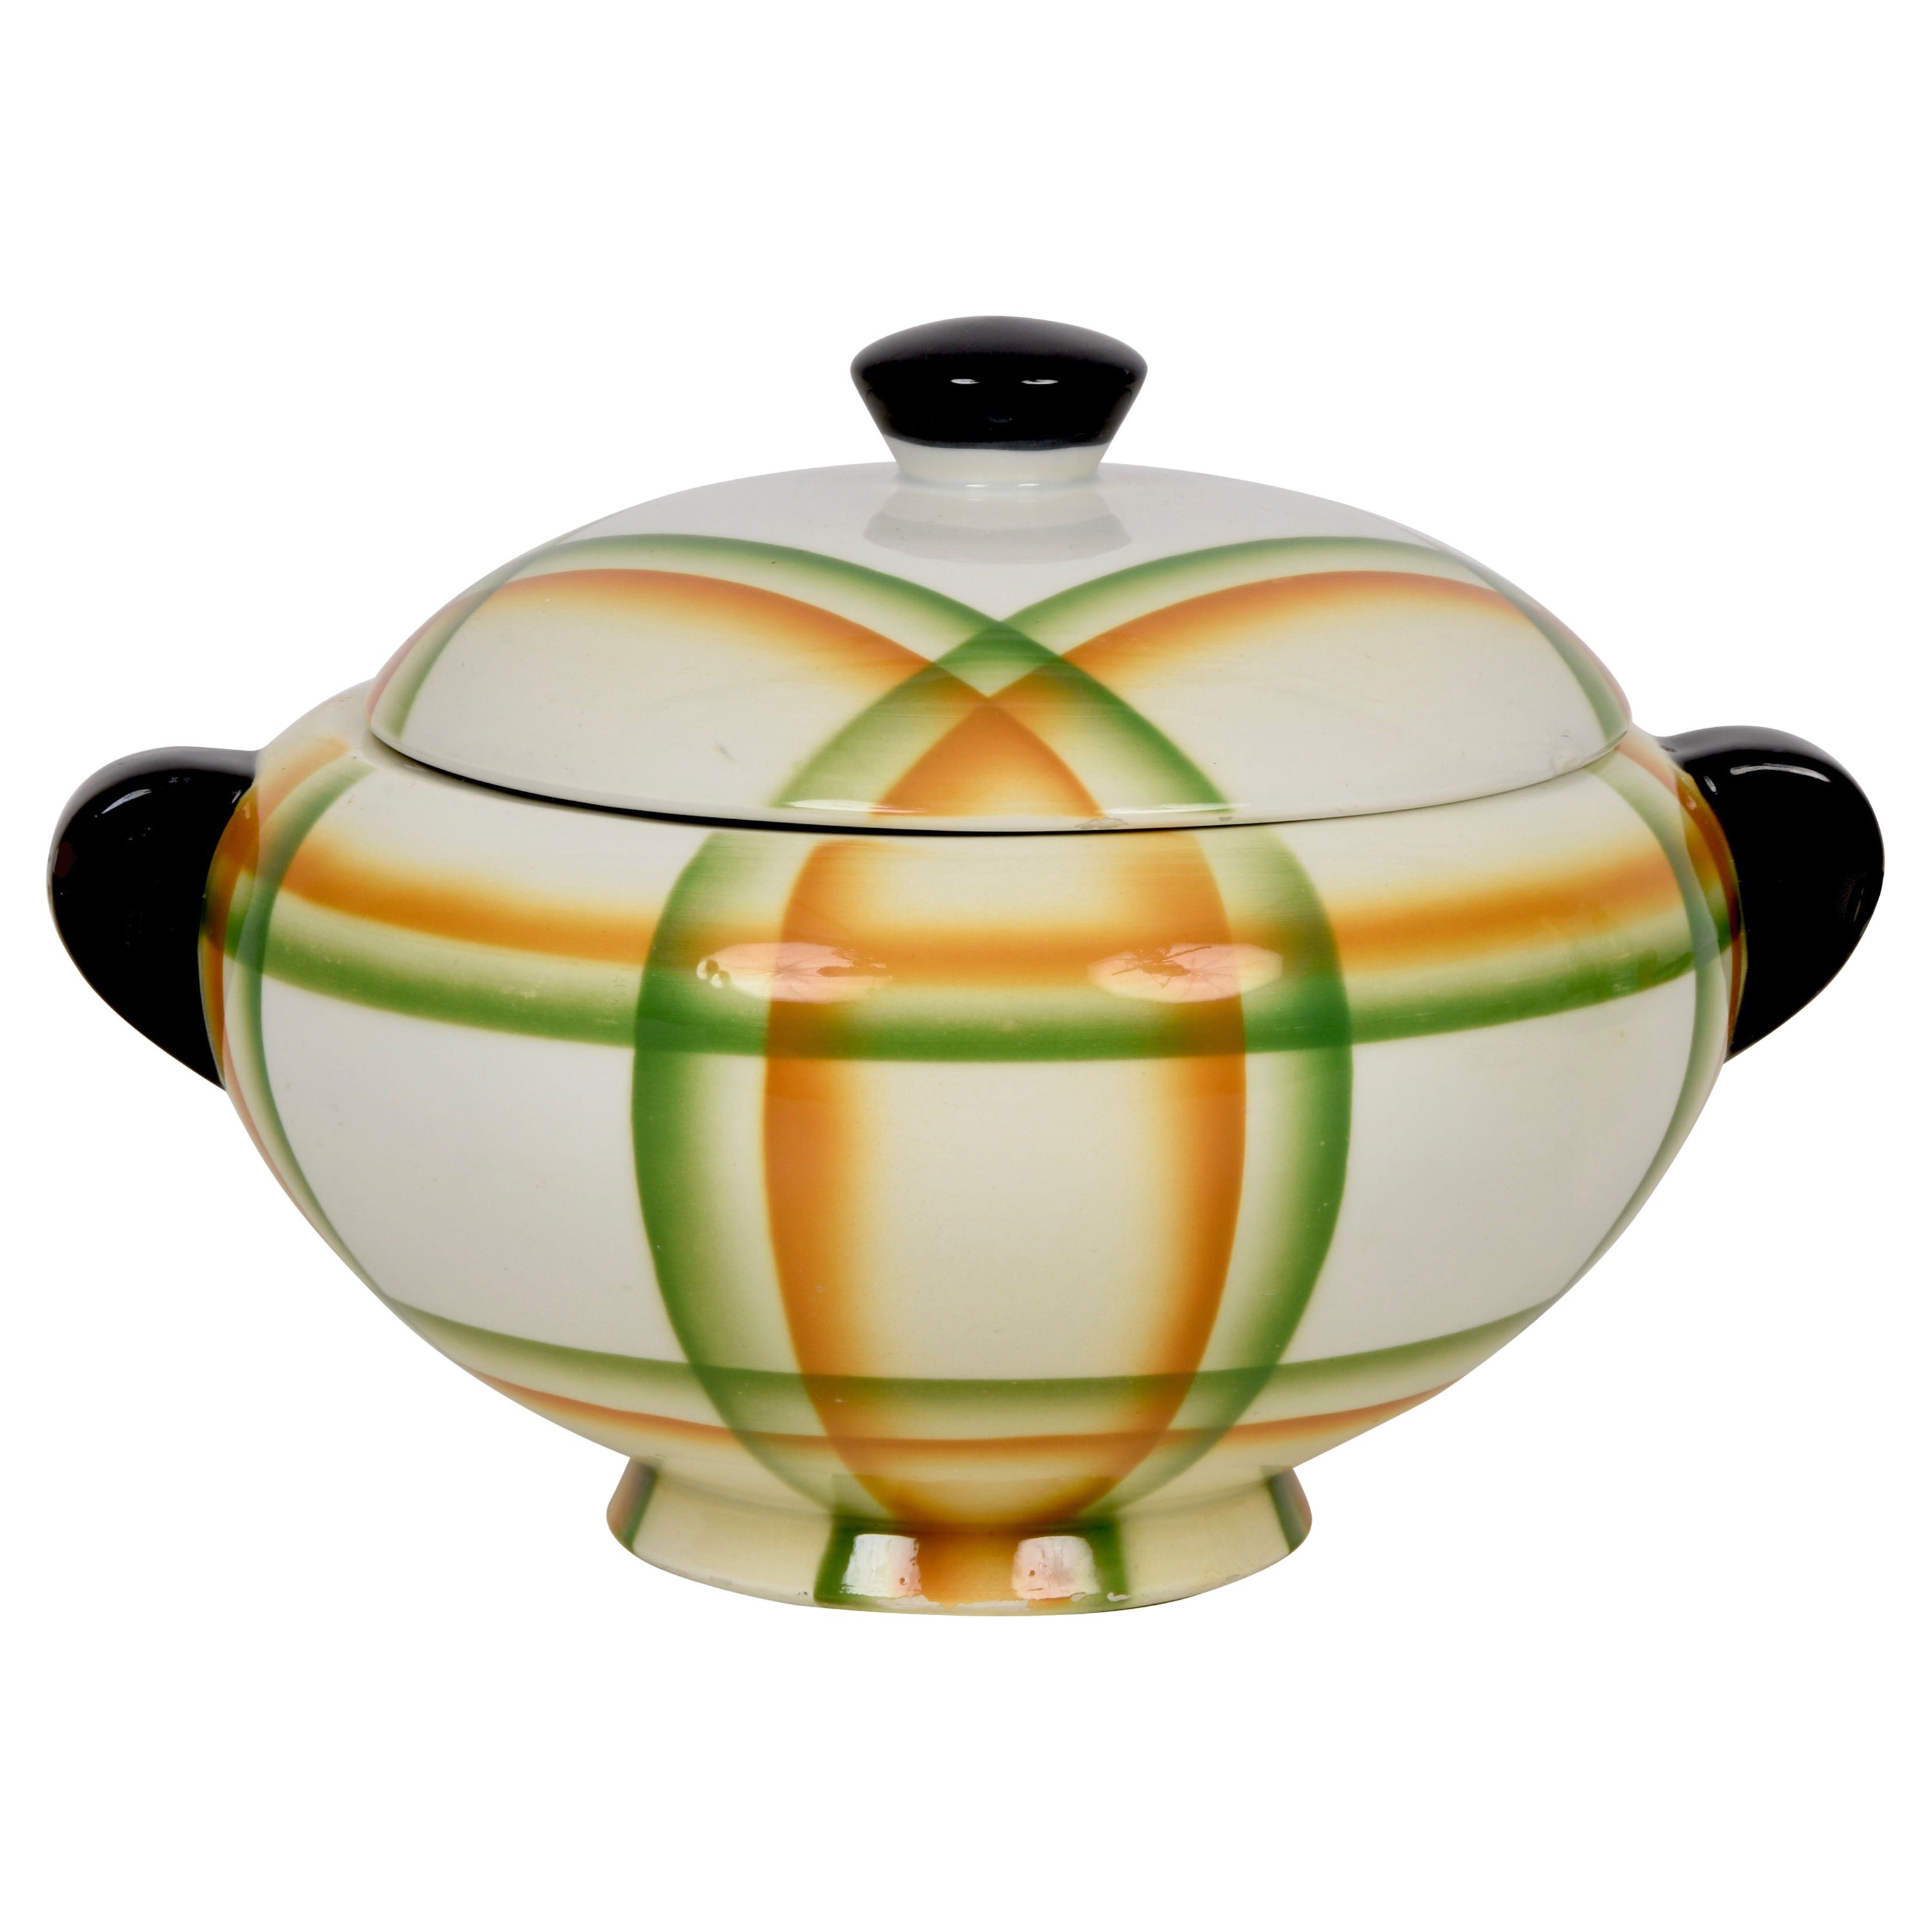 Simonetto Futuristic Airbrushed Ceramic Italian Centerpiece Soup Bowl, 1930s For Sale